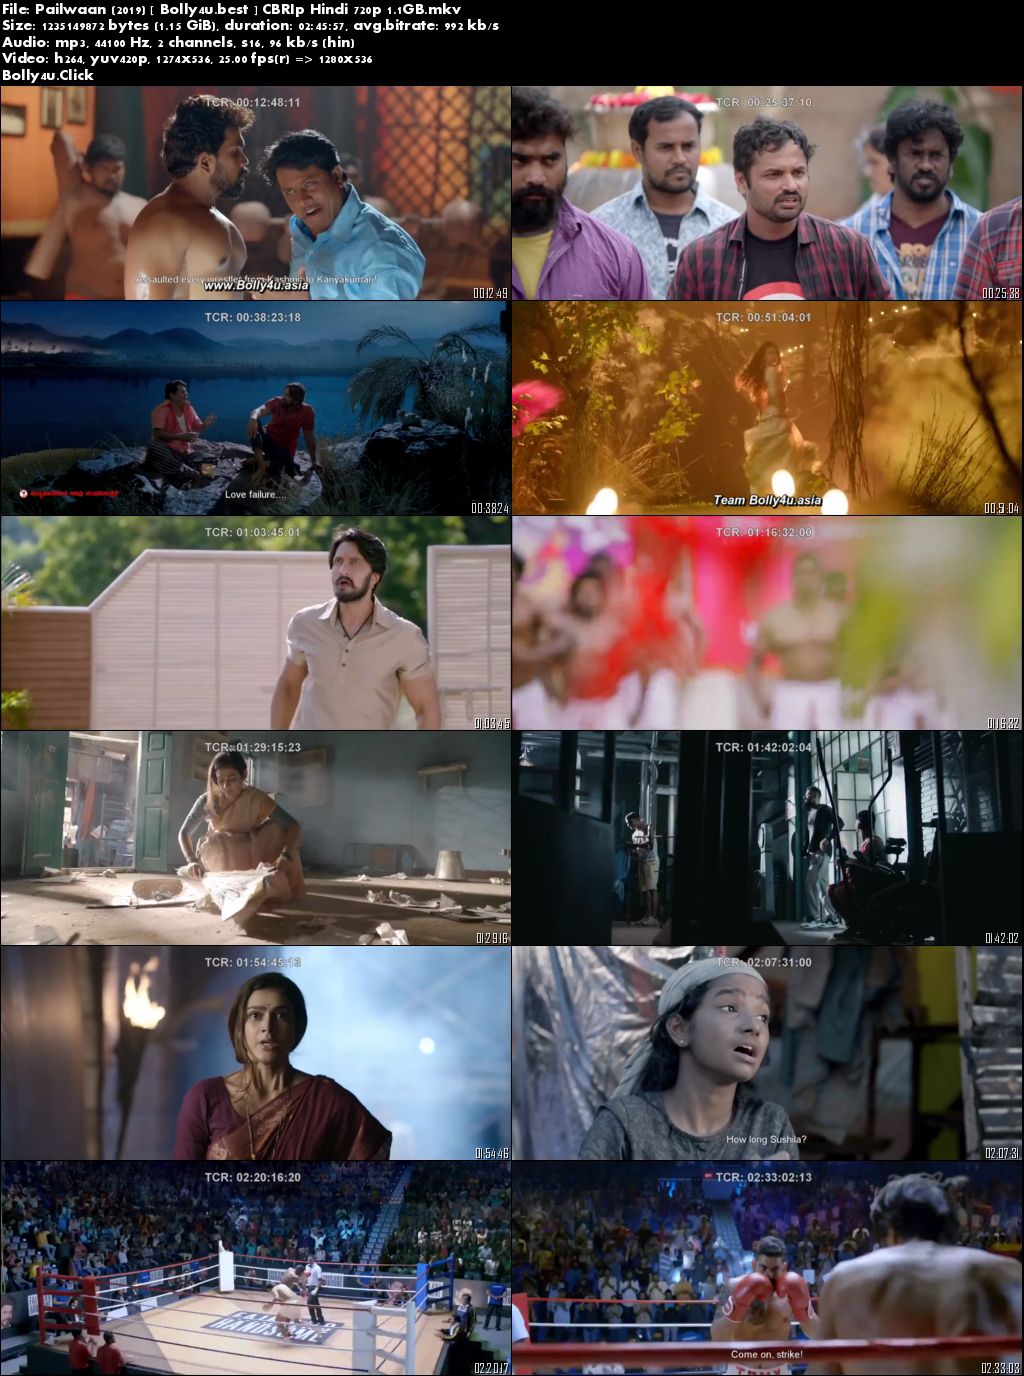 Pailwaan 2019 CBRip 500MB Full Hindi Movie Download 480p